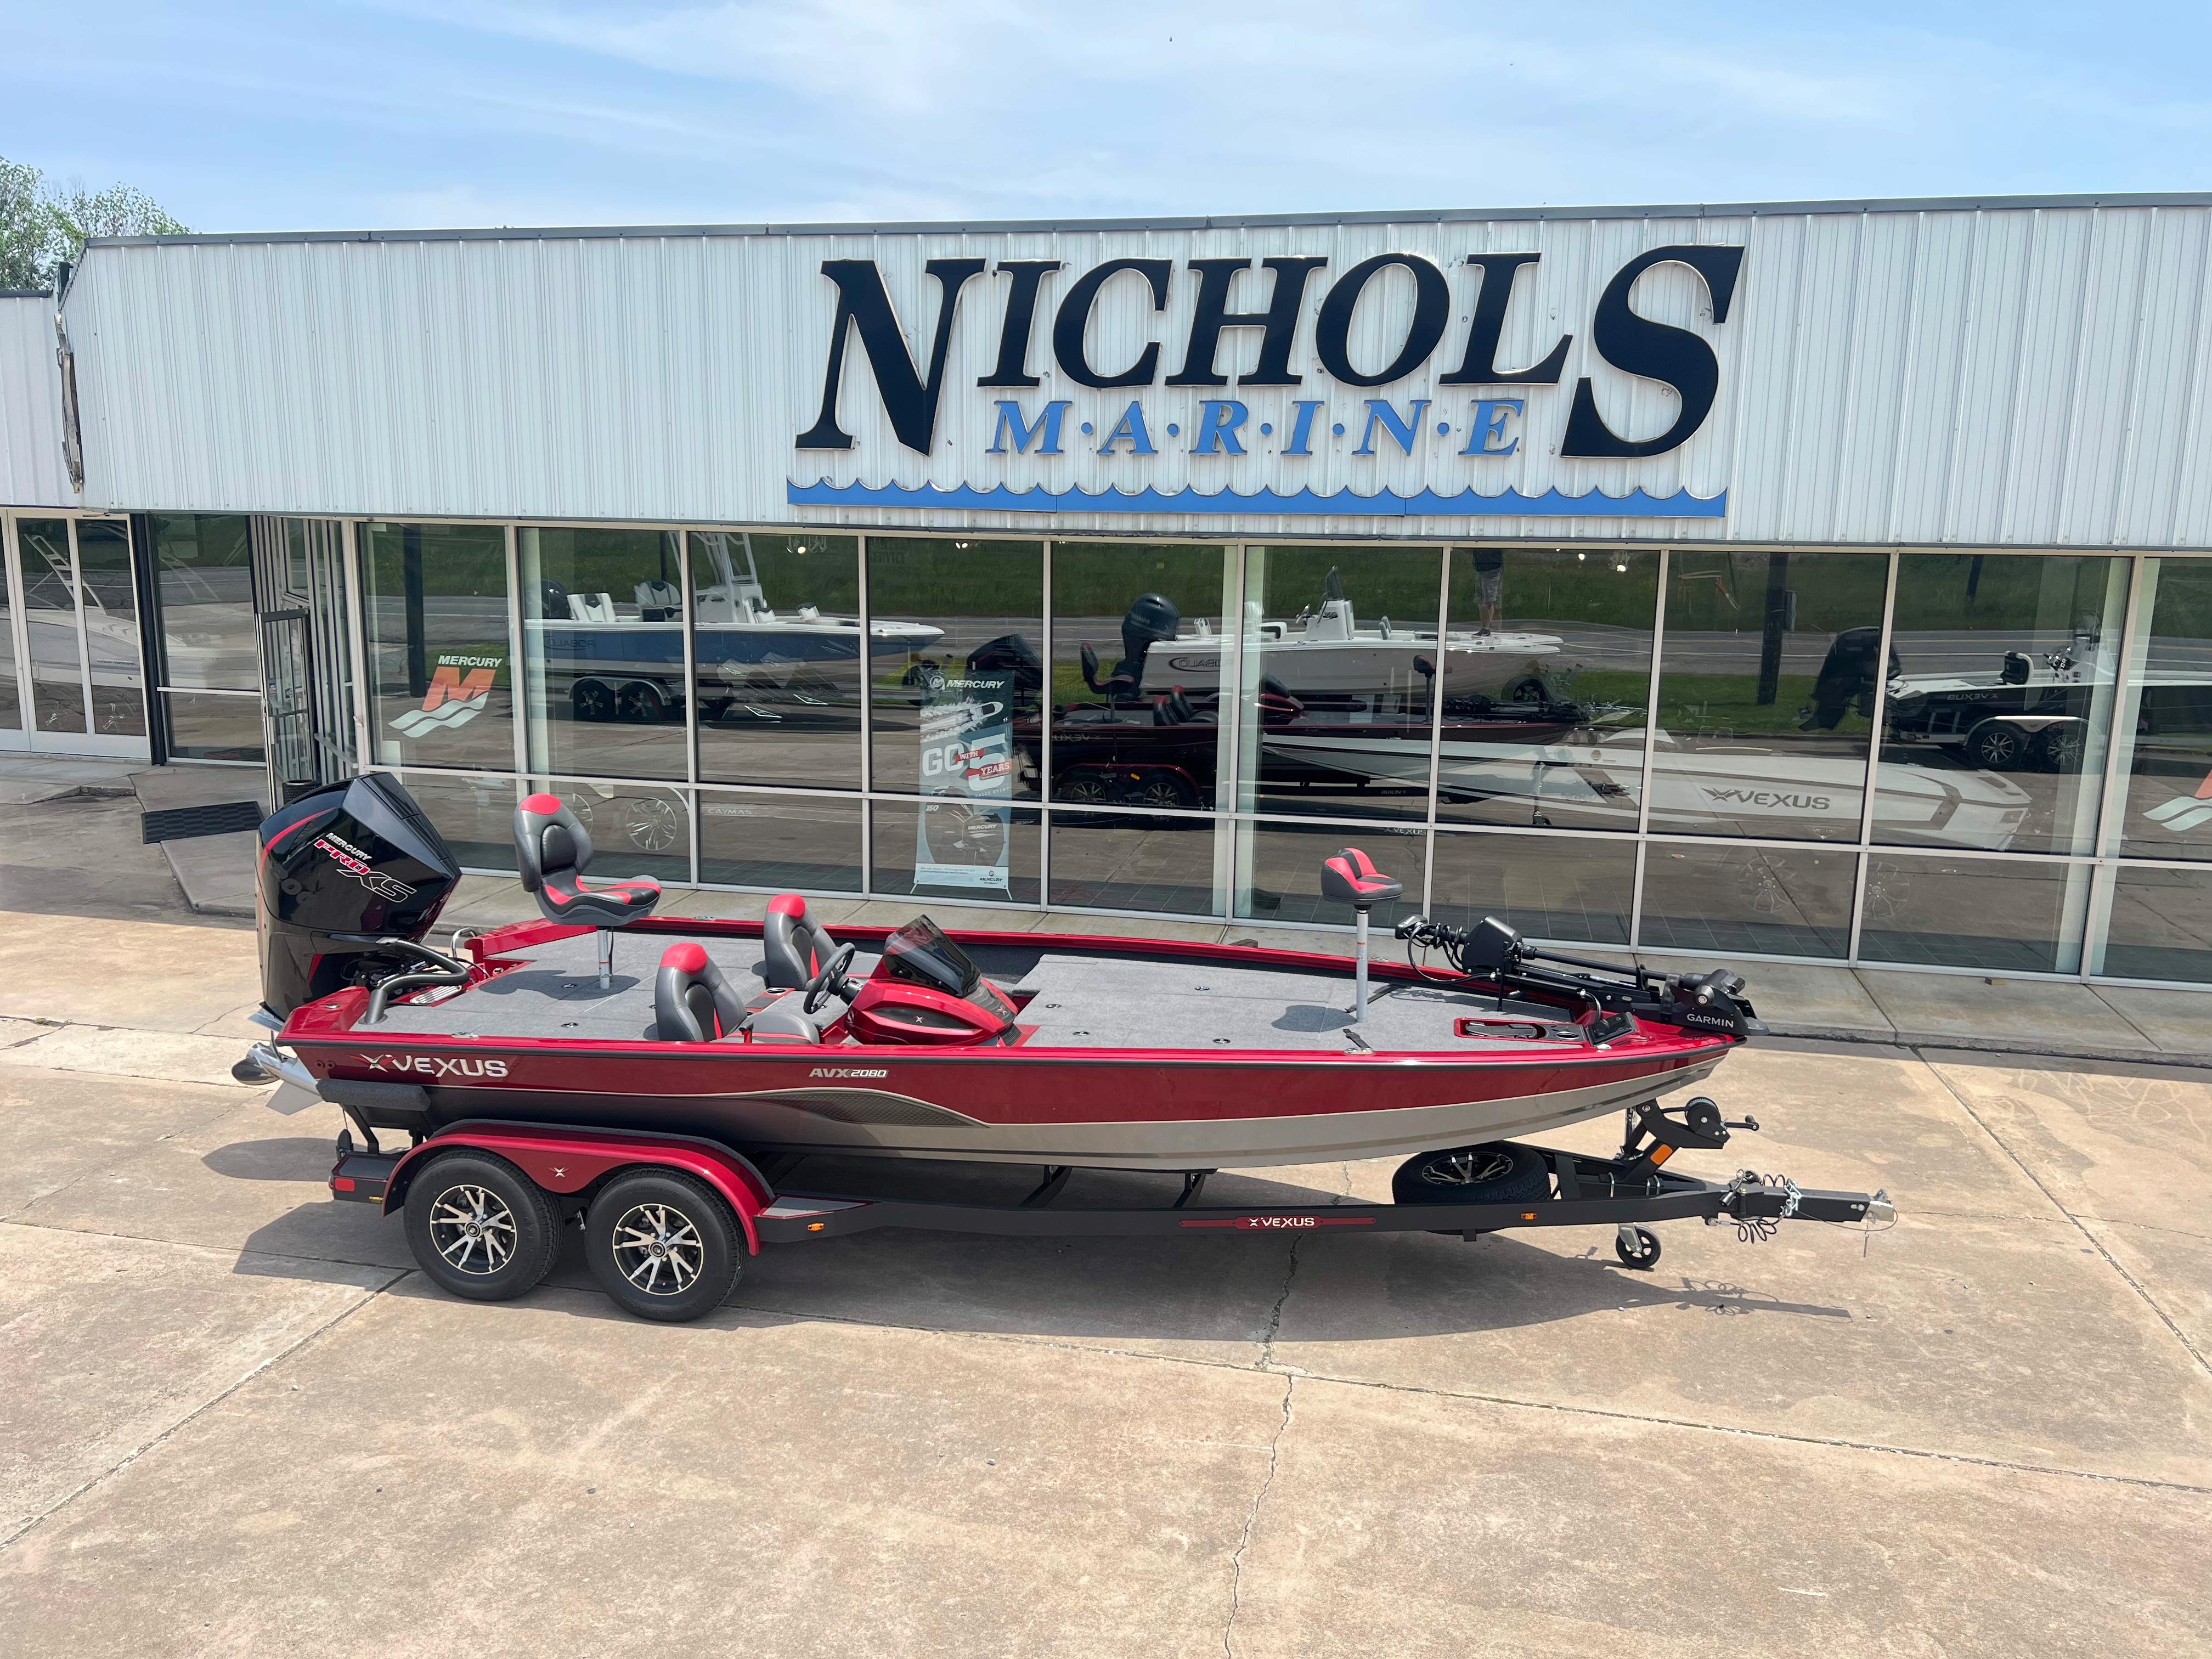 New Vexus Boats For Sale - Nichols Marine Boat Sales